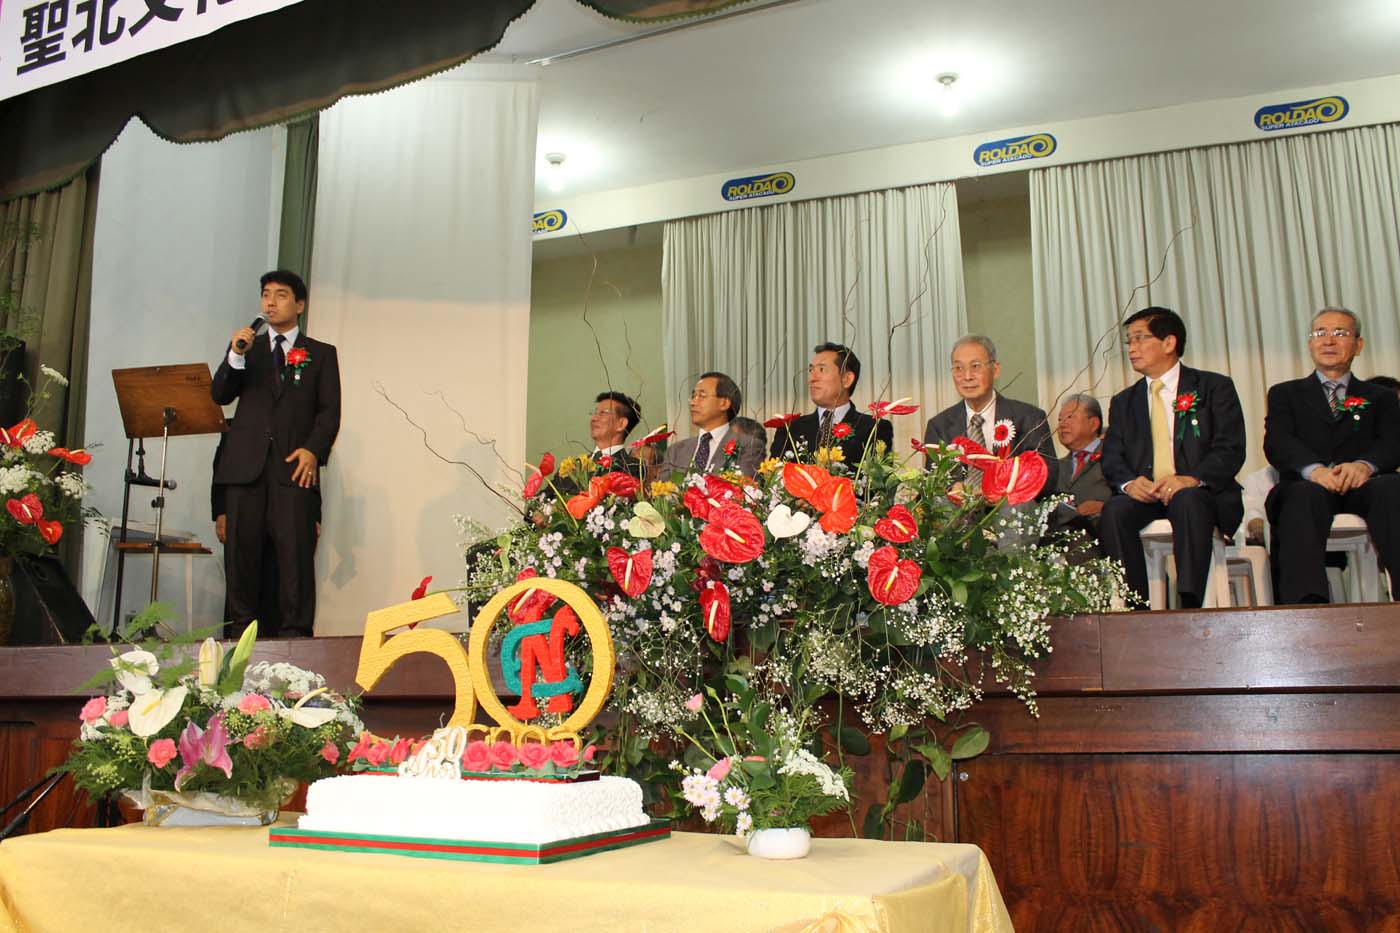 Nishimoto fala durante cerimnia comemorativa <a style='float:right;color:#ccc' href='https://www3.al.sp.gov.br/repositorio/noticia/N-11-2012/fg119311.jpg' target=_blank><i class='bi bi-zoom-in'></i> Clique para ver a imagem </a>